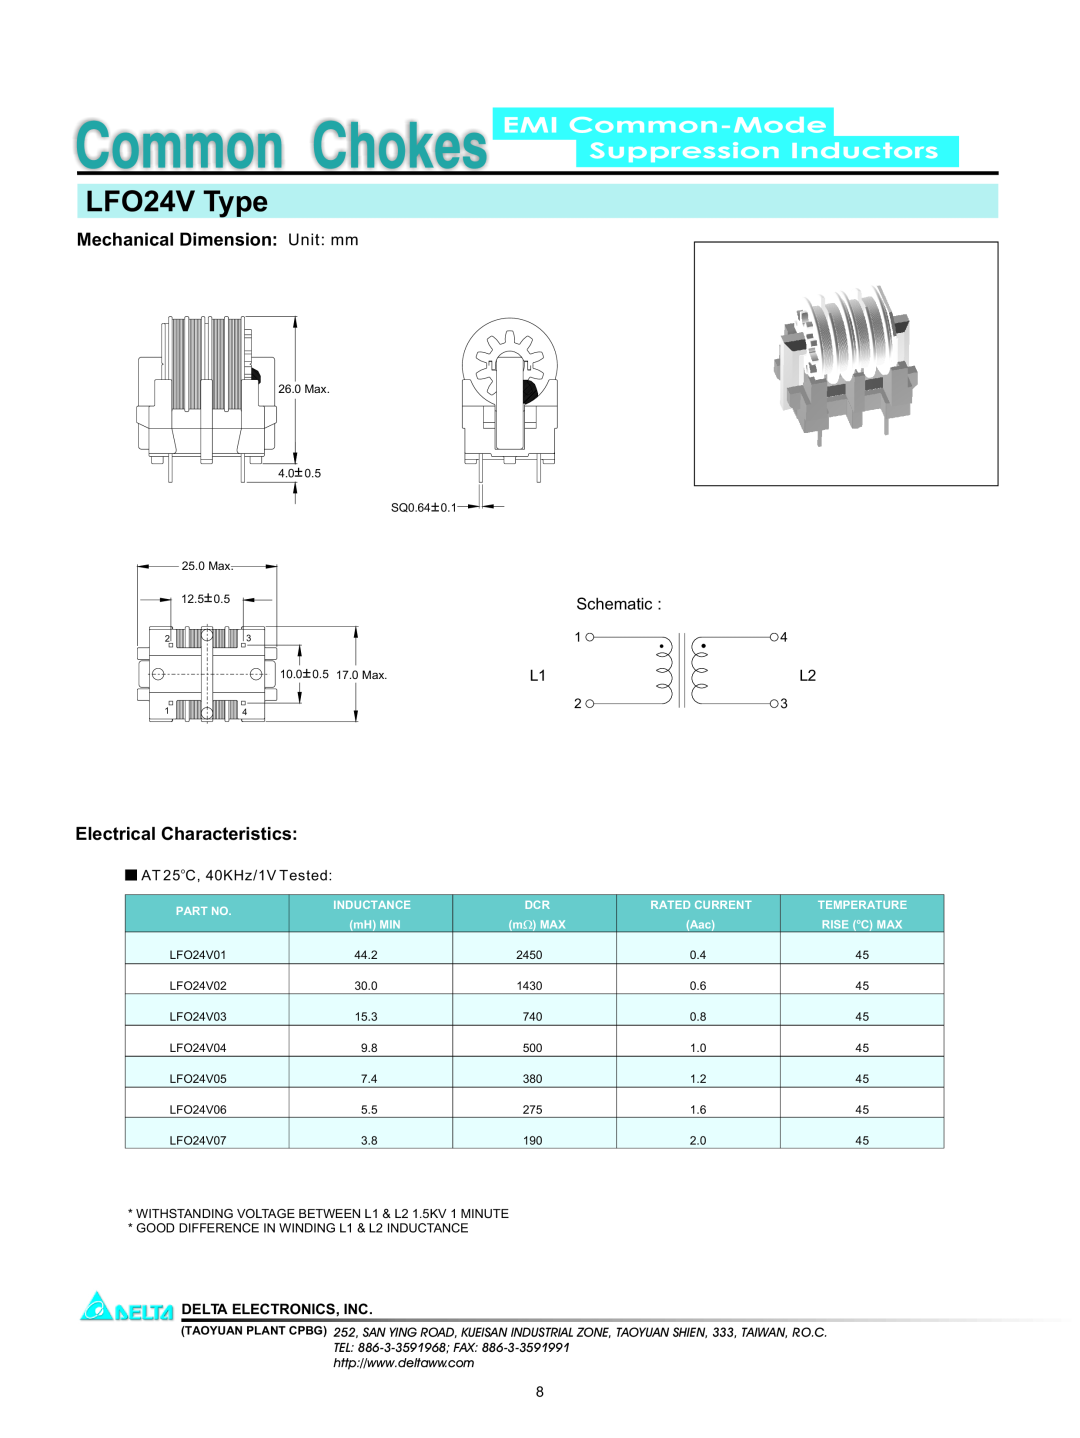 Delta Electronics manual LFO24V Type, EMI Common-Mode Suppression Inductors, Mechanical Dimension Unit mm, Schematic 